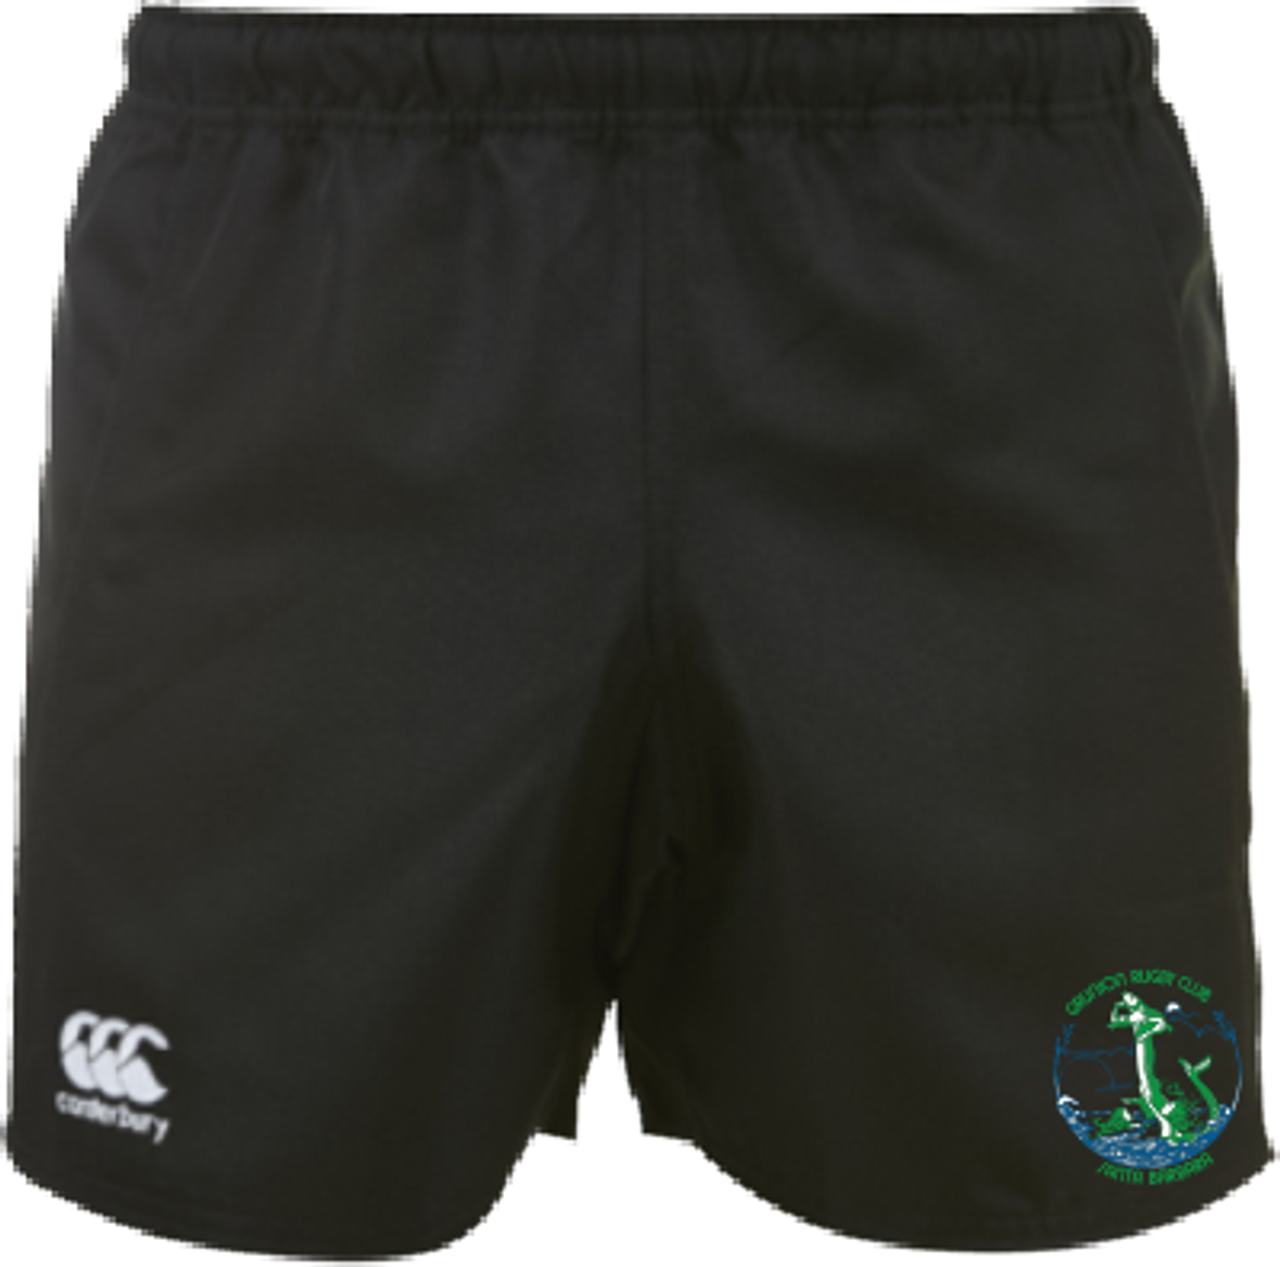 Grunion Rugby CCC Advantage Shorts